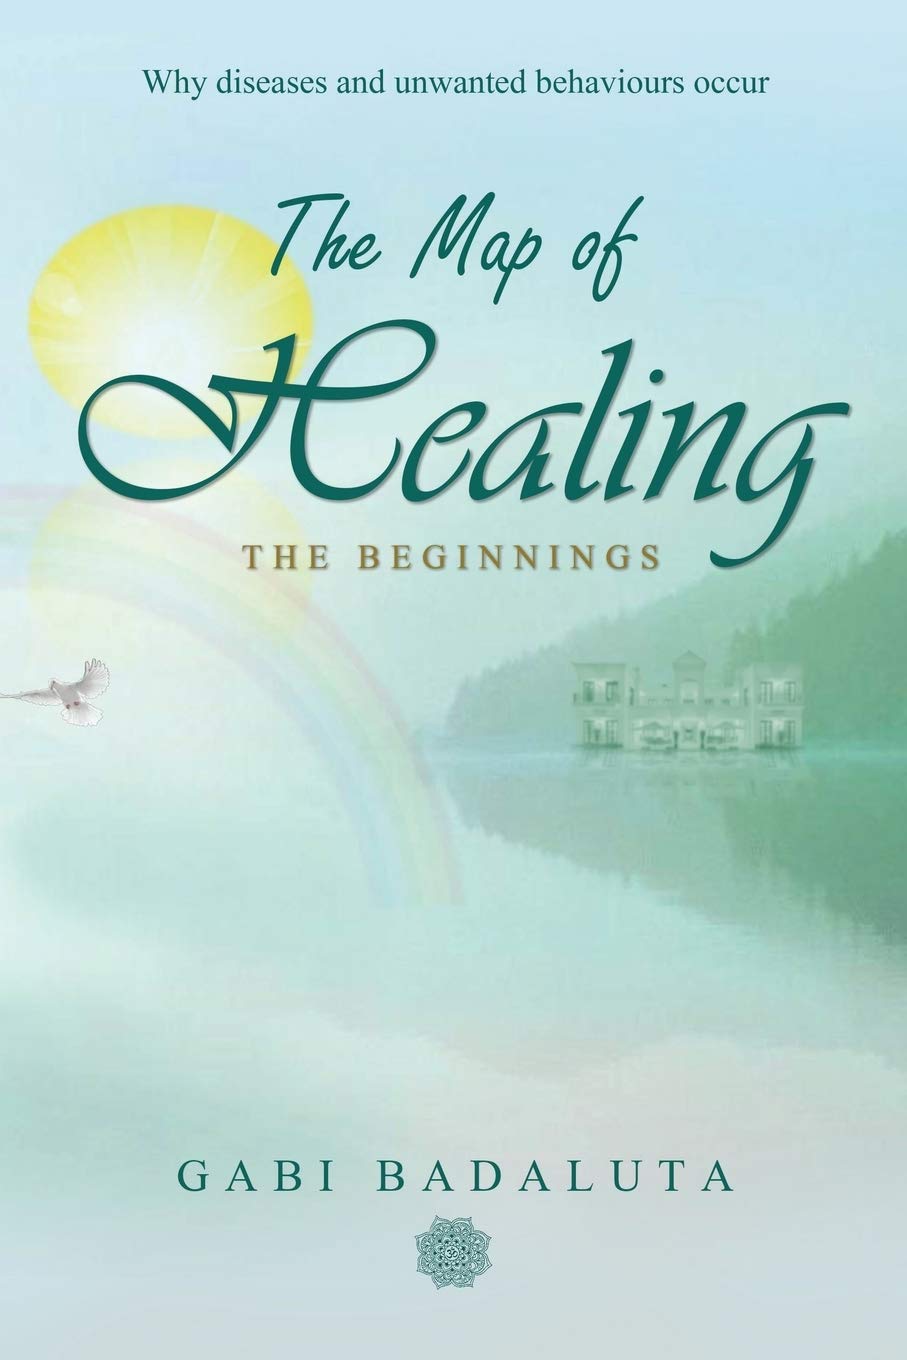 The Map of Healing: The Beginnings by Author Gabi Badaluta